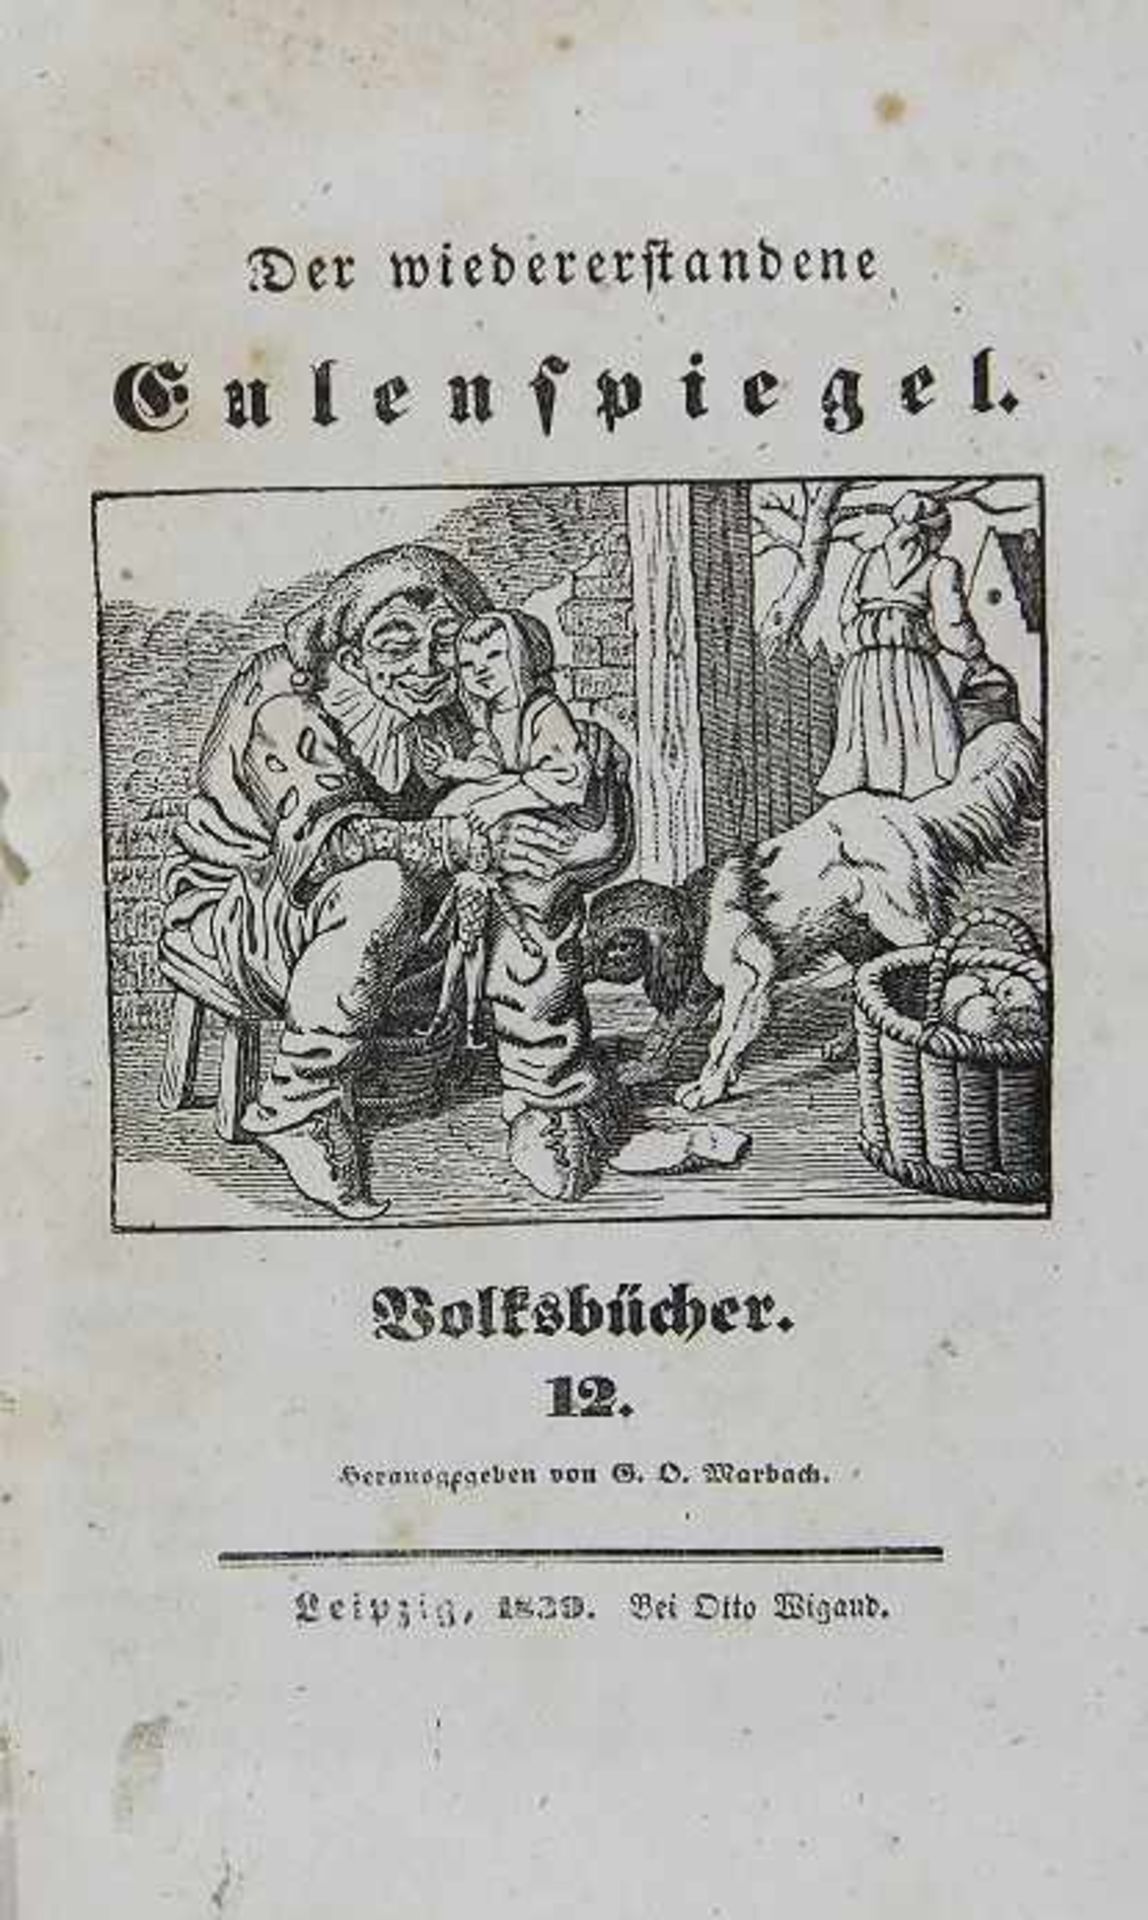 Marbach, G. O.: "Volksbücher" - Image 5 of 6